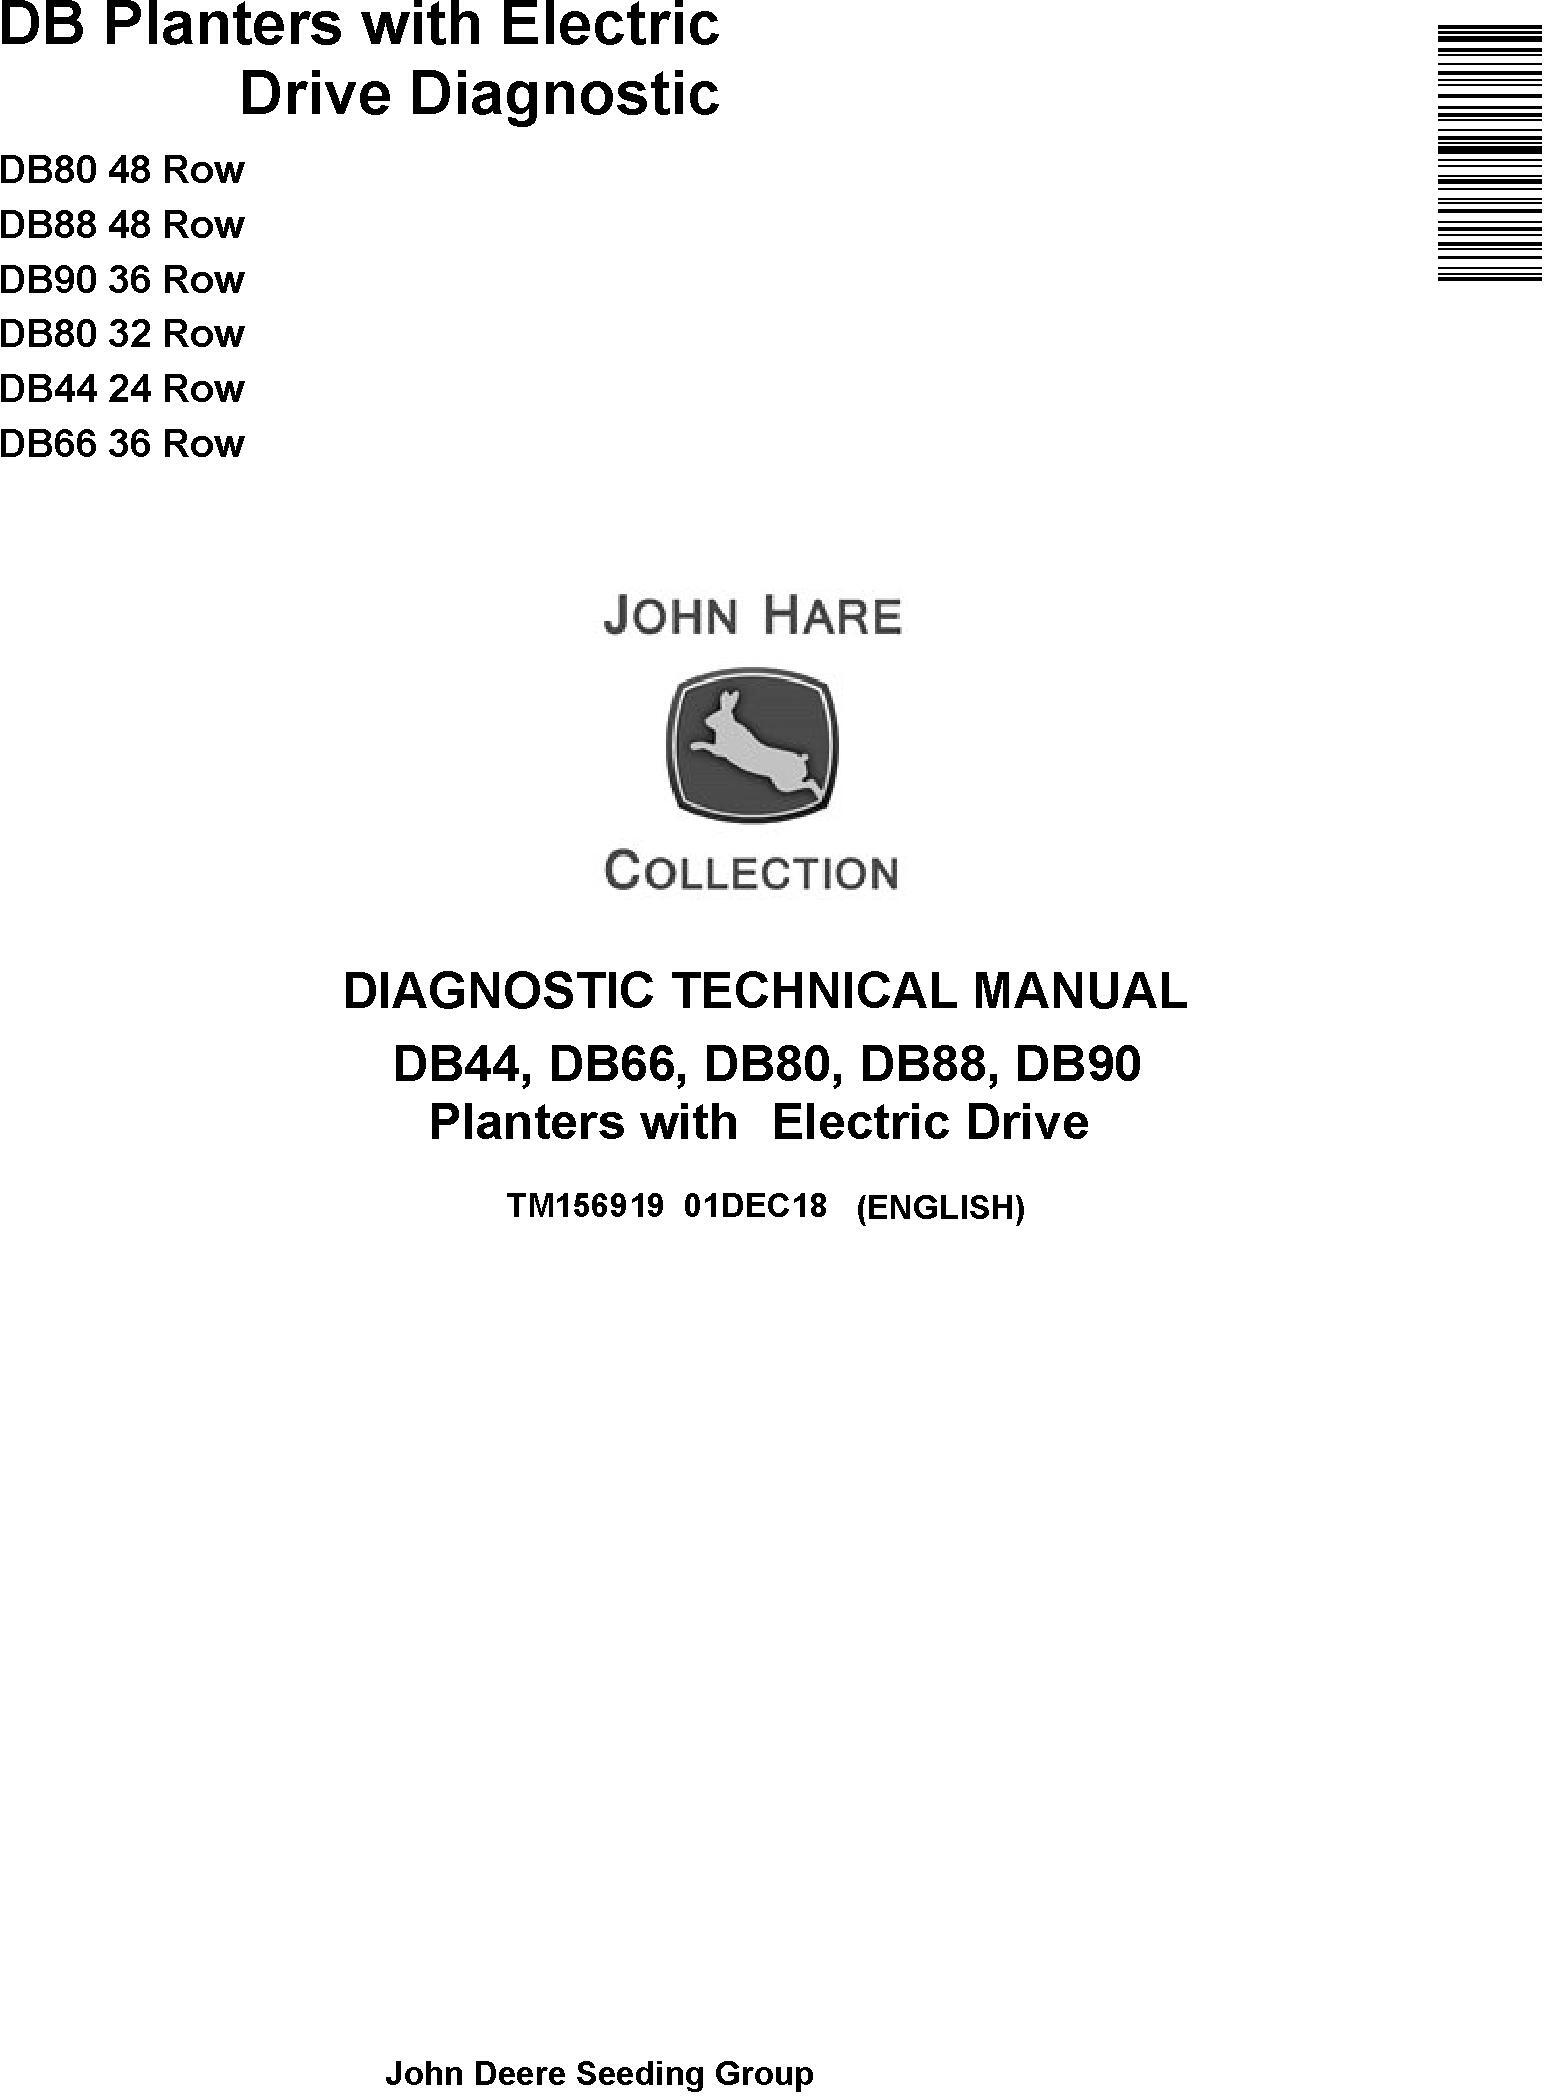 John Deere DB44 DB66 DB80 DB88 DB90 Planter Diagnostic Technical Manual TM156919